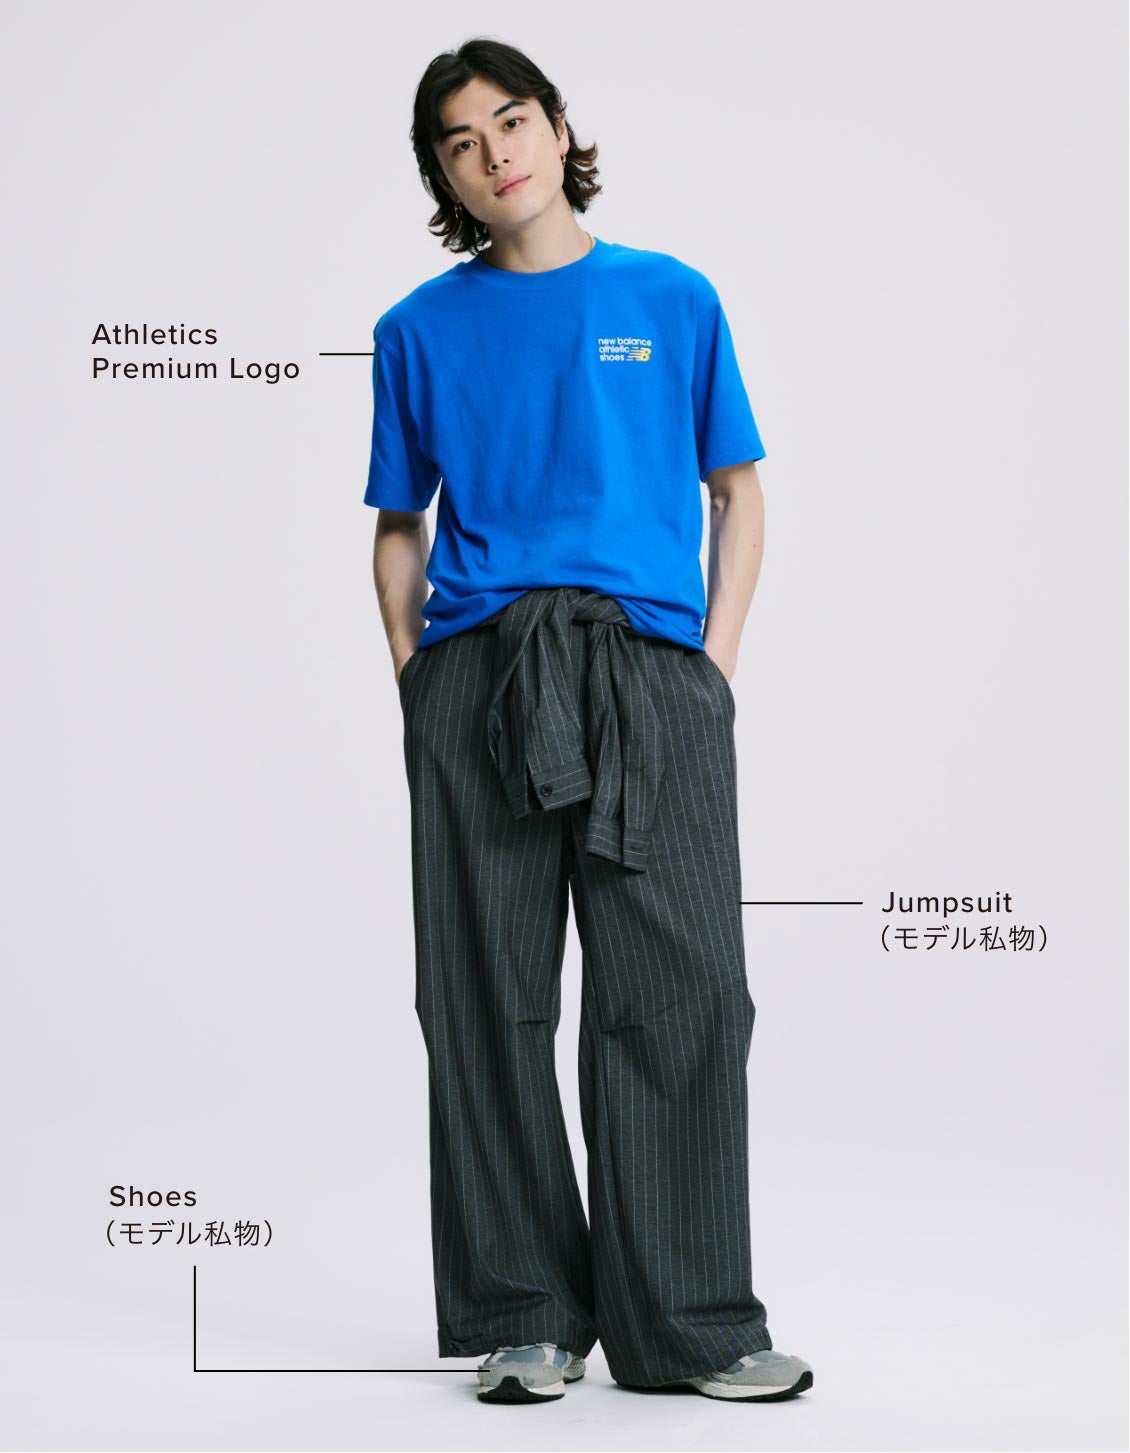 Takuro Kusunoki outfit details: T-shirt: Athletics Premium Logo, Pants: Jumpsuit (model's own), Shoes: model's own